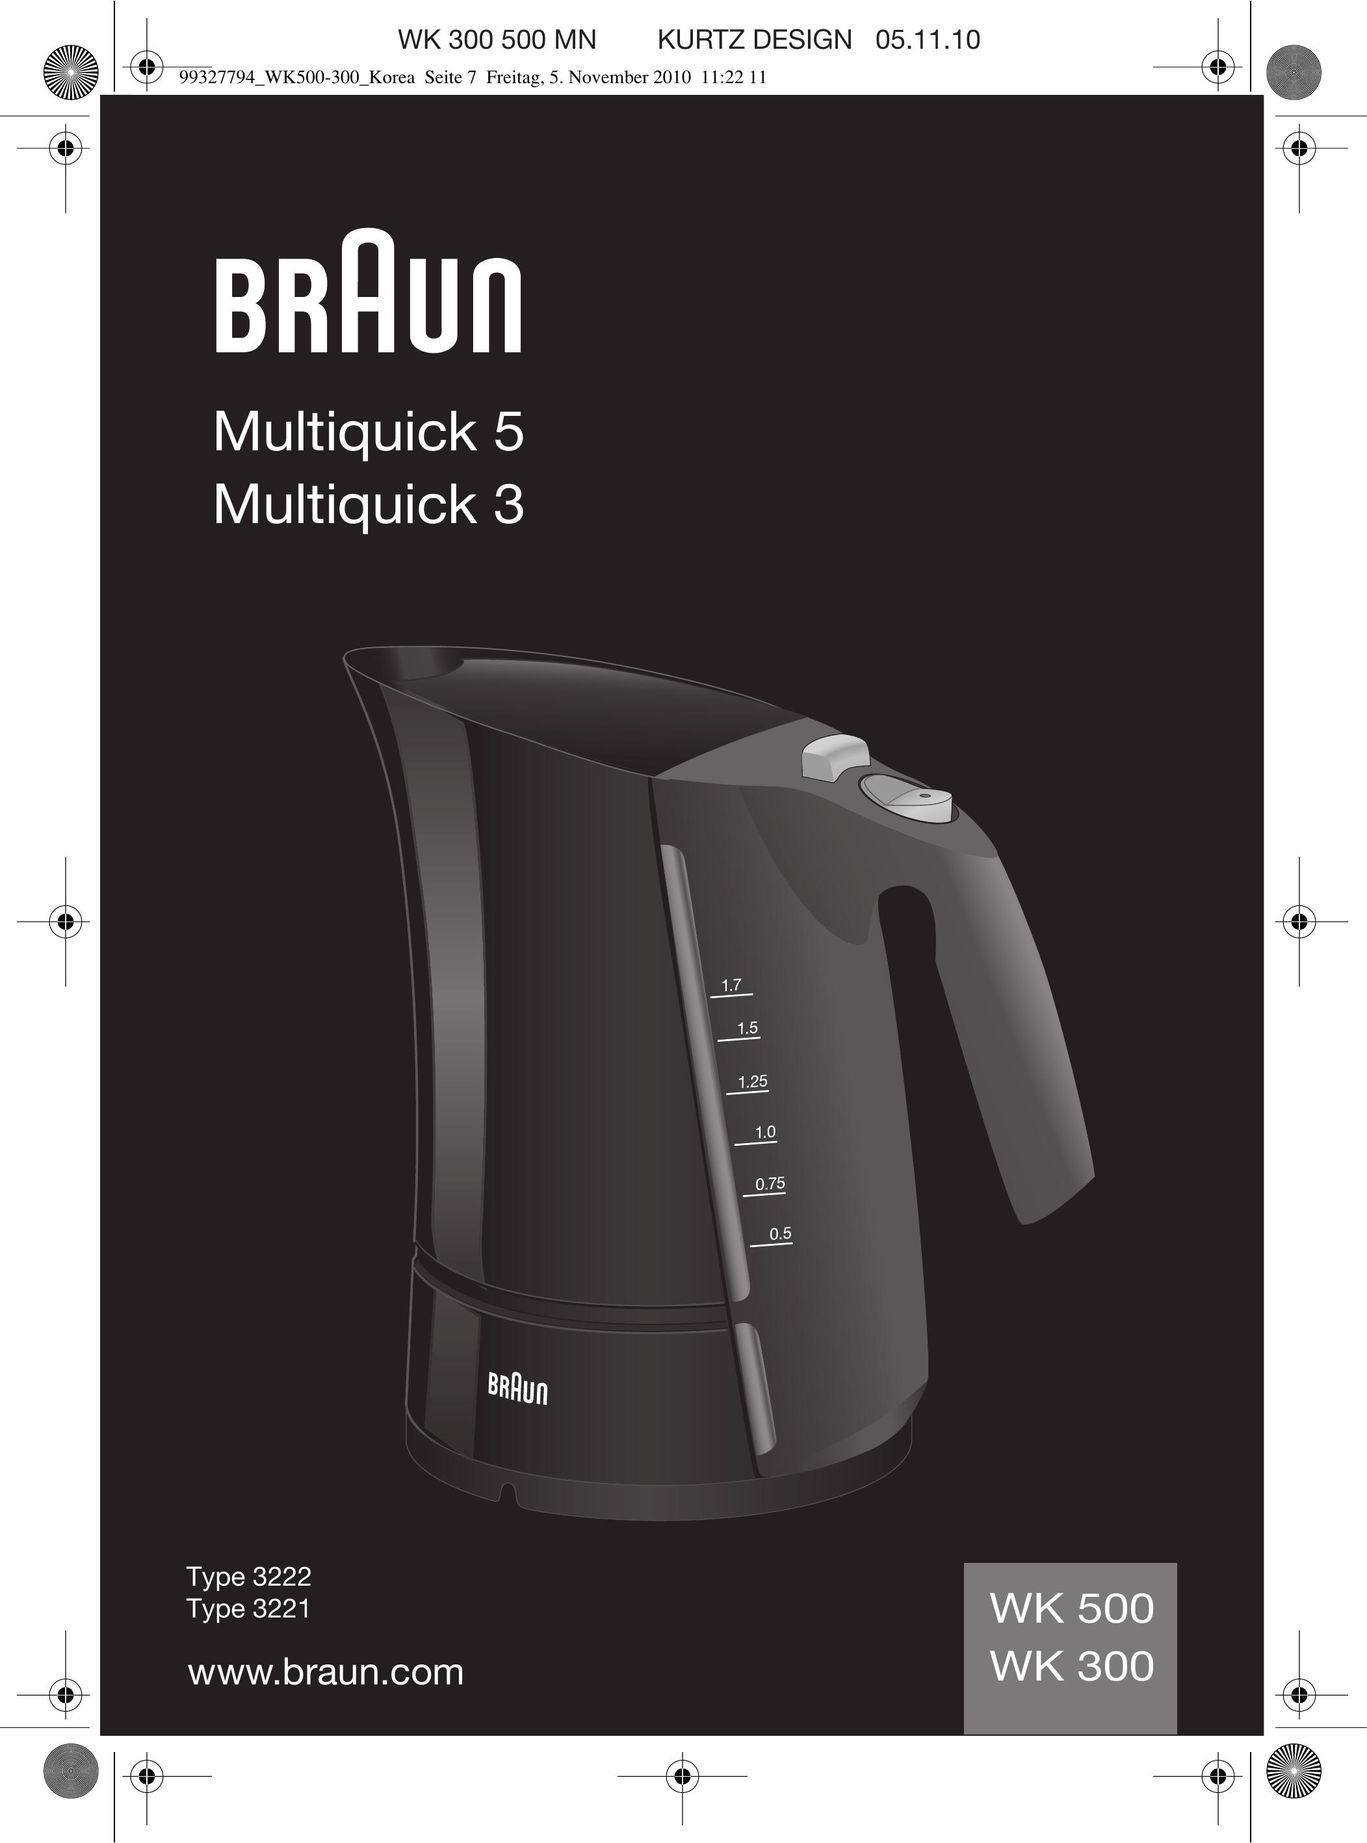 Braun WK 500 Hot Beverage Maker User Manual